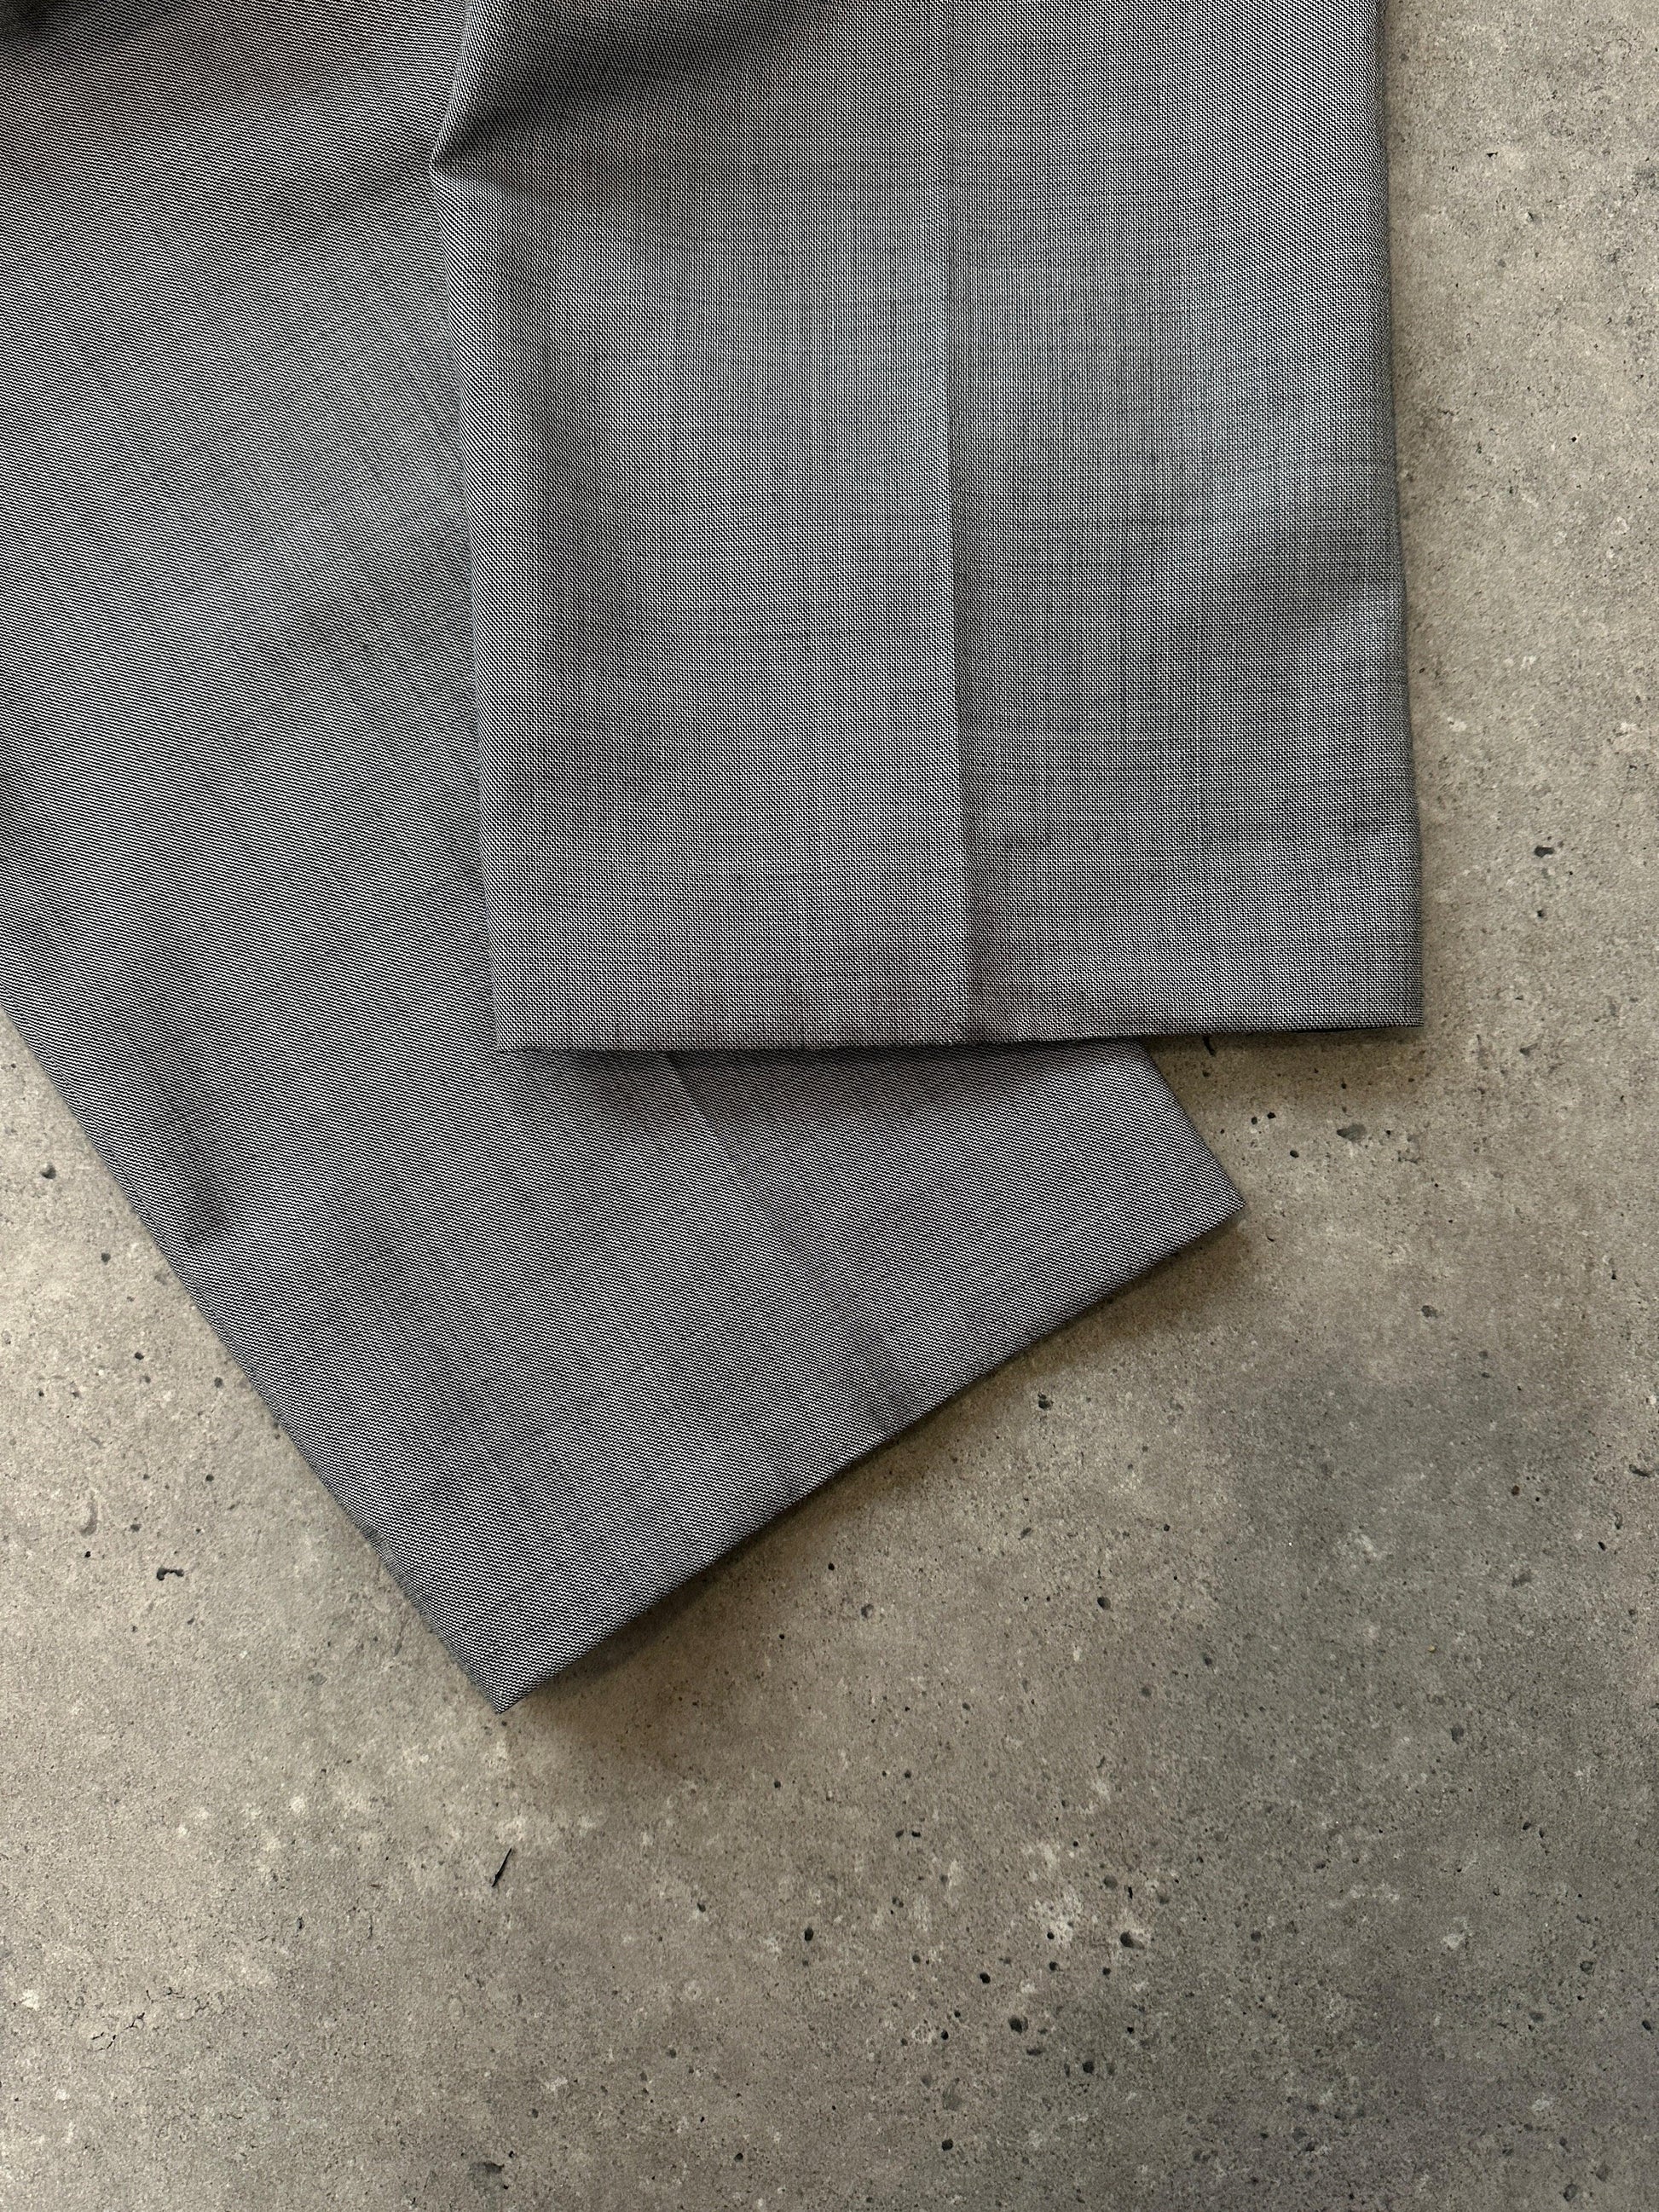 Pierre Cardin Wool Two Piece Suit Set - 40R/W32 - Known Source